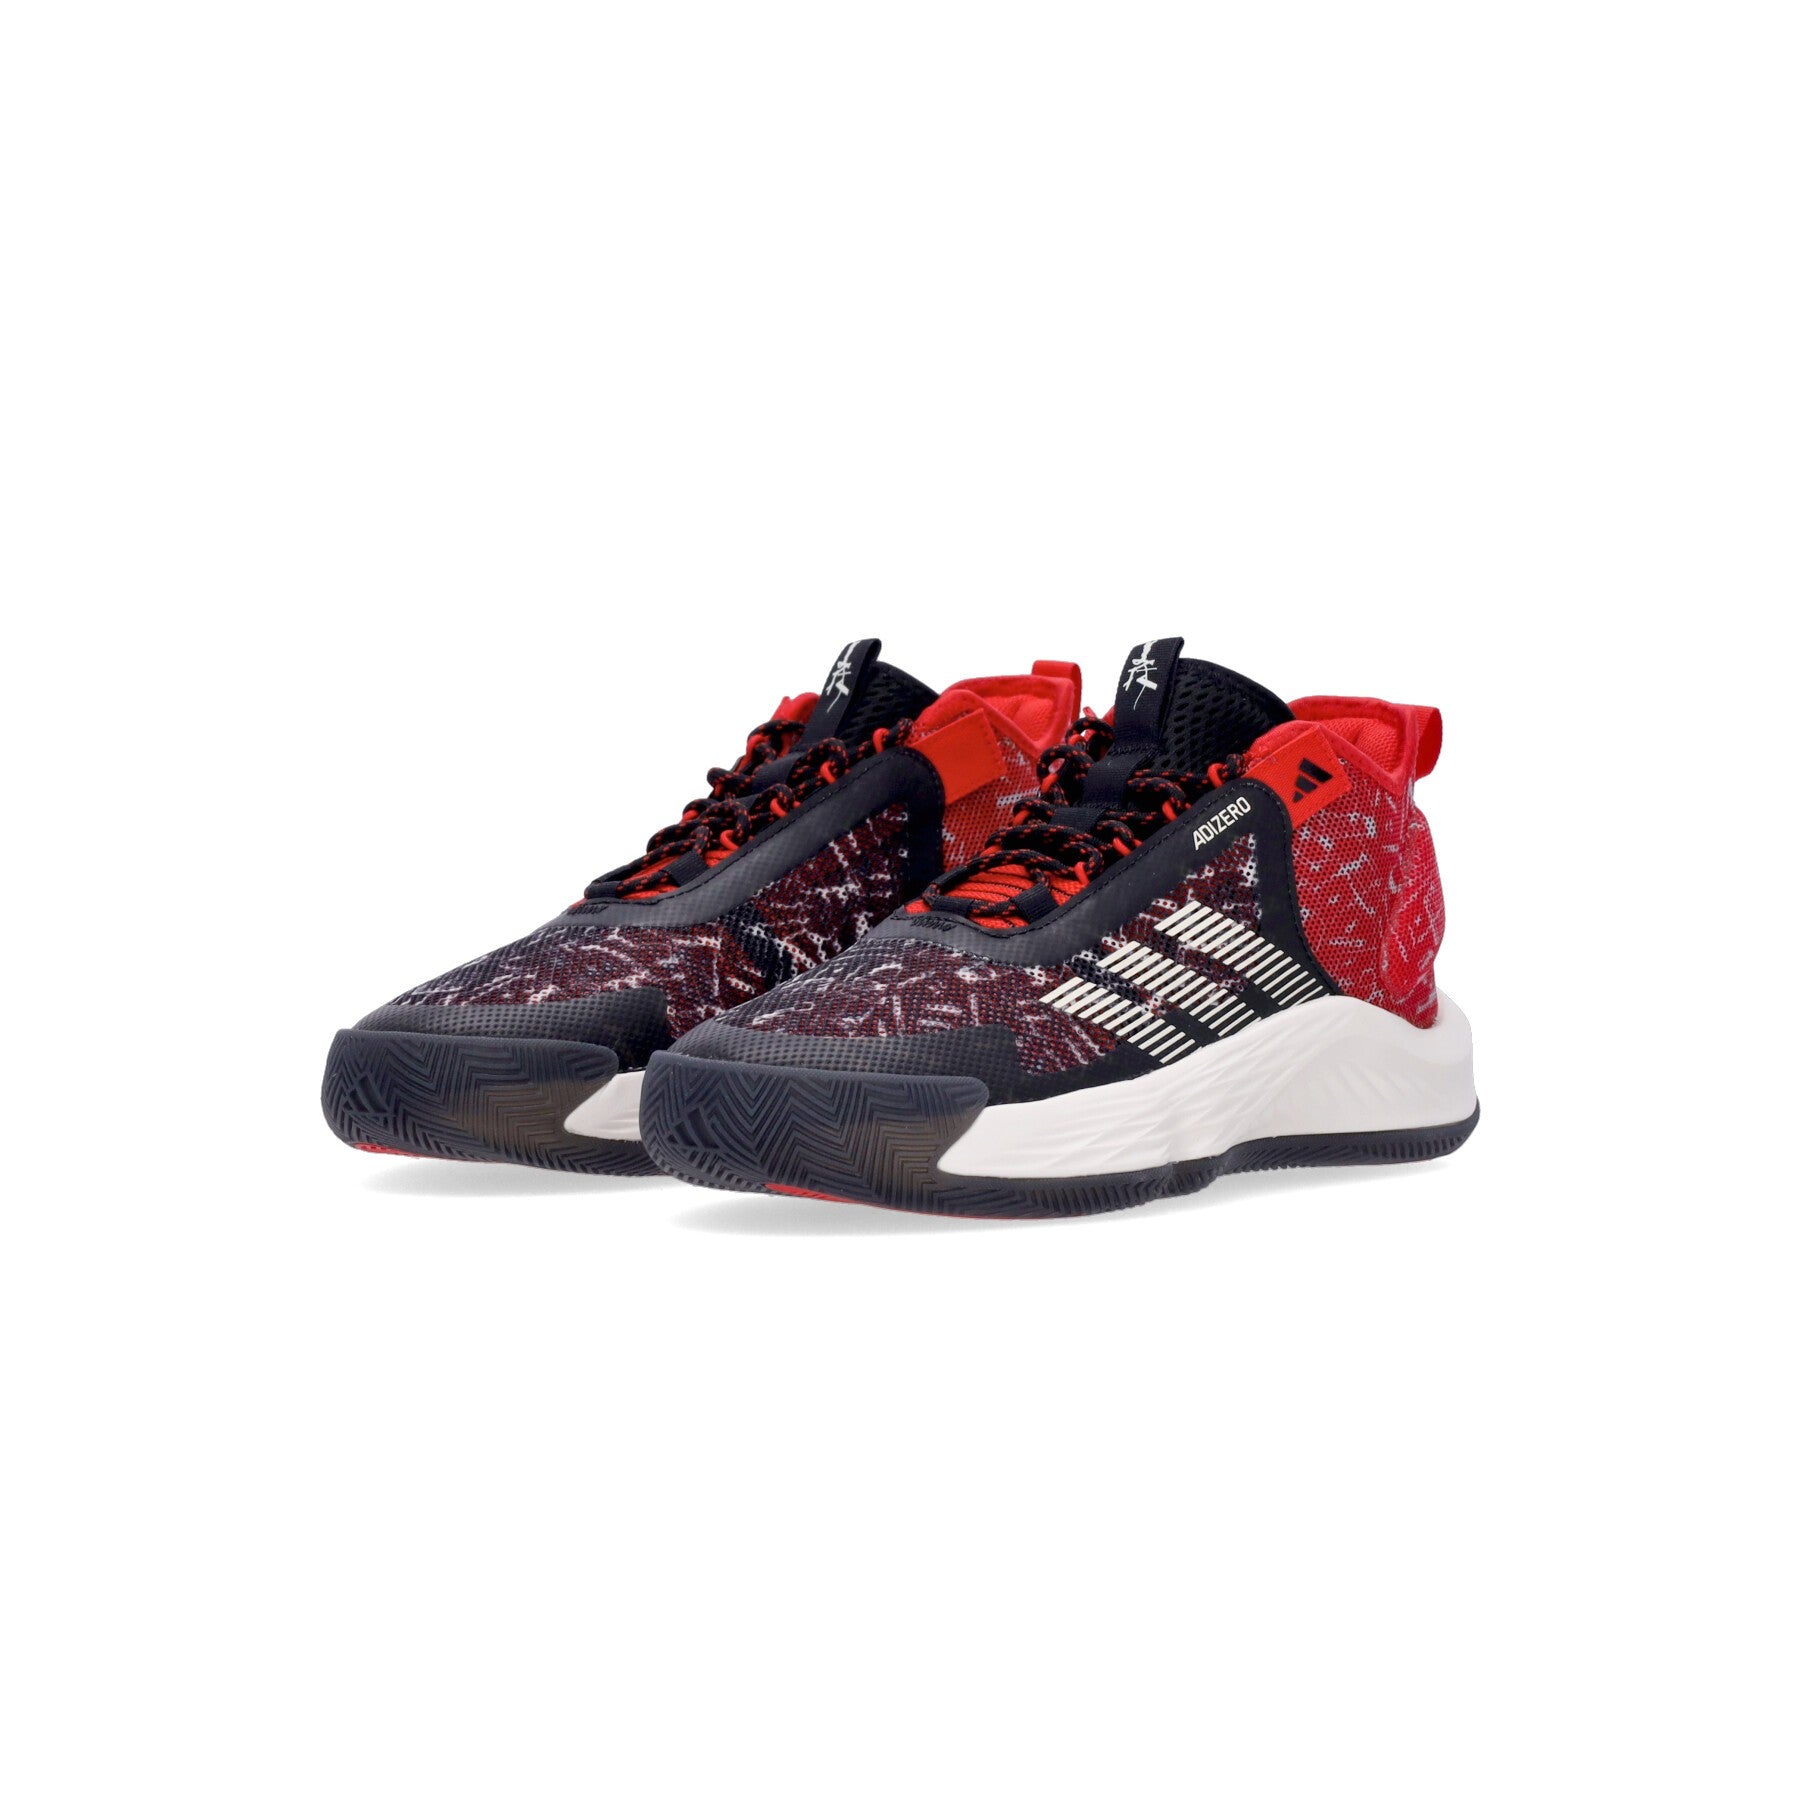 Adidas, Scarpa Basket Uomo Adizero Select, 